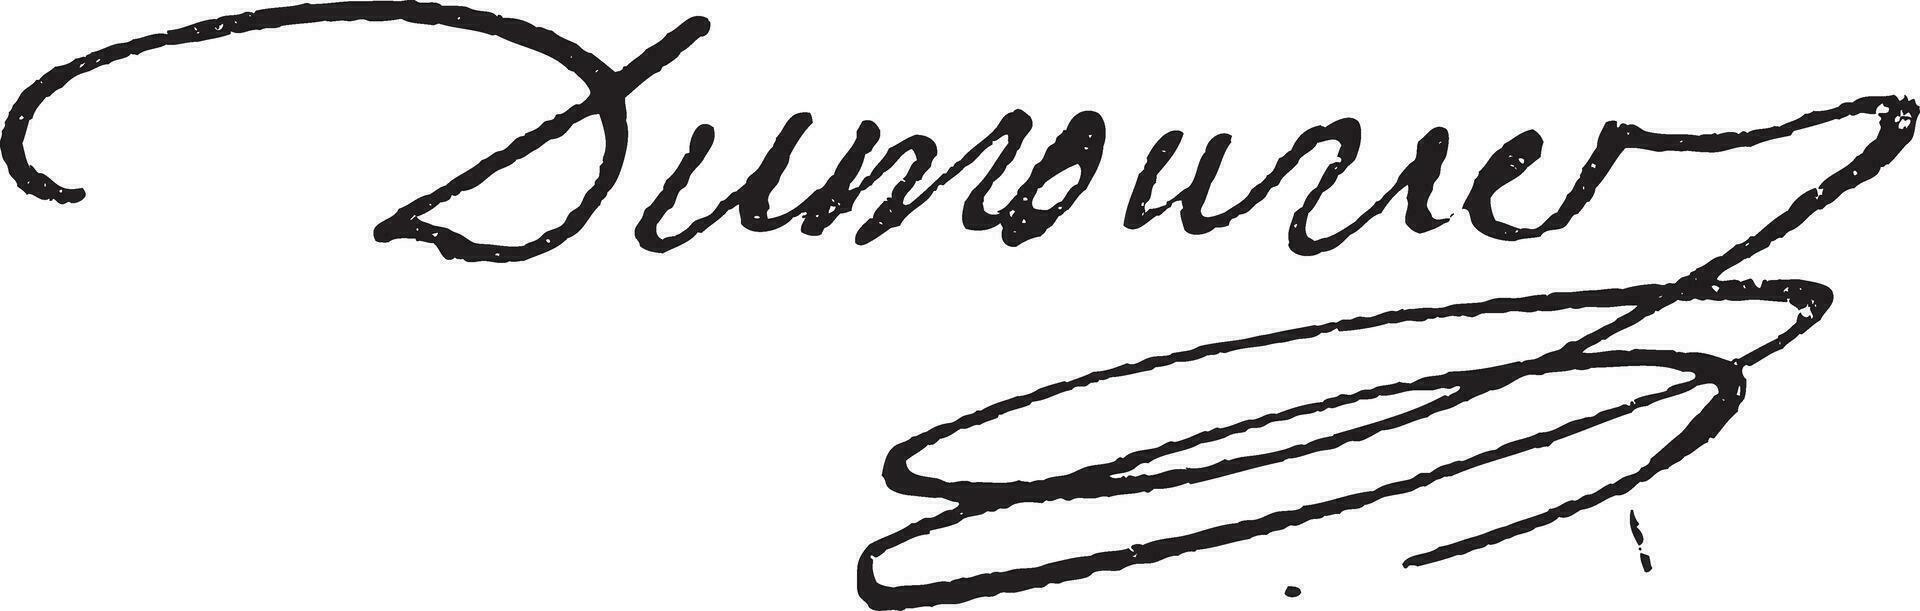 Signature of Charles-Francois Perier Dumouriez 1739-1821, vintage engraving. vector